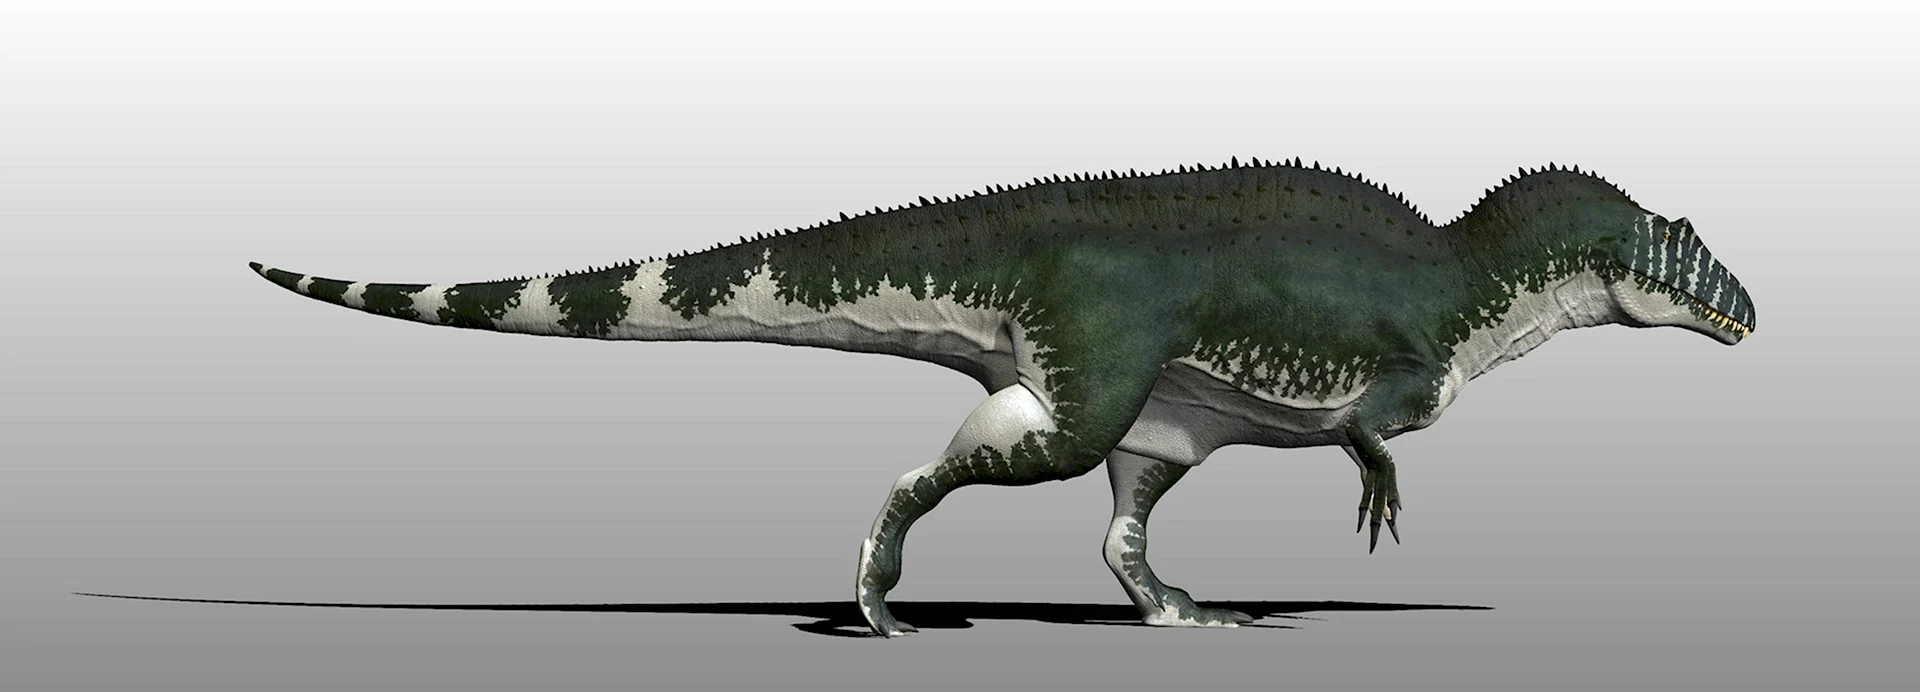 Акрокантозавр Бермуда